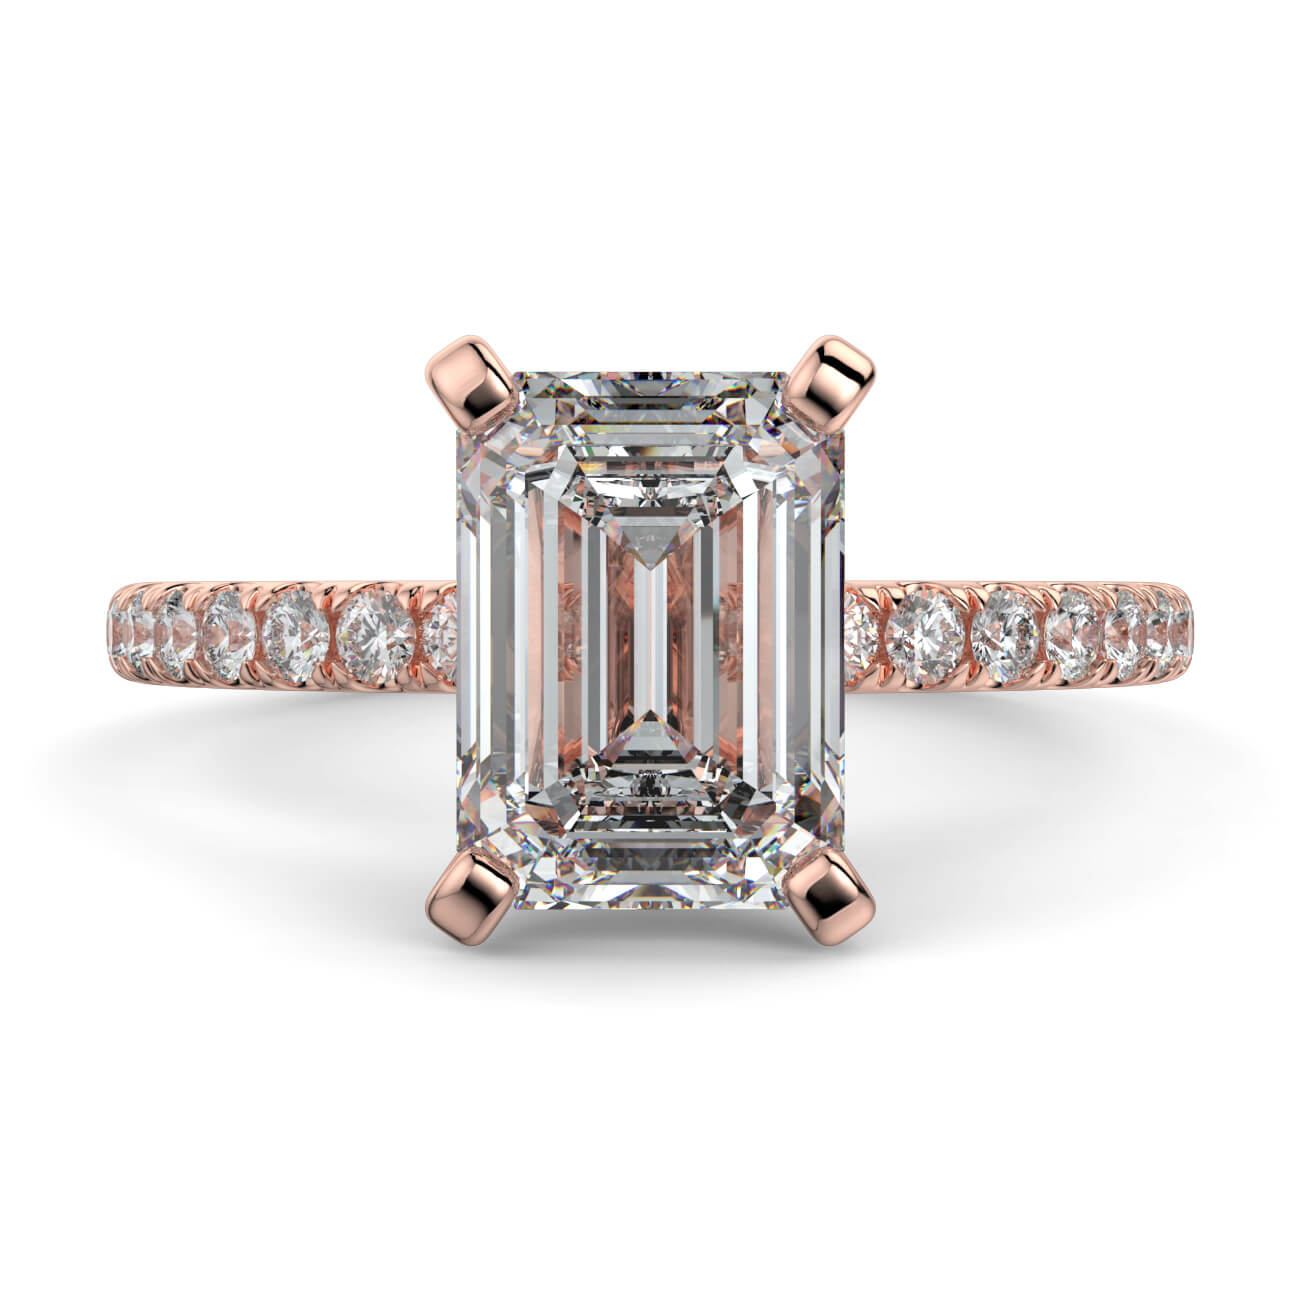 Delicate ‘Liat’ Emerald Cut Diamond Engagement Ring in 18k Rose Gold – Australian Diamond Network